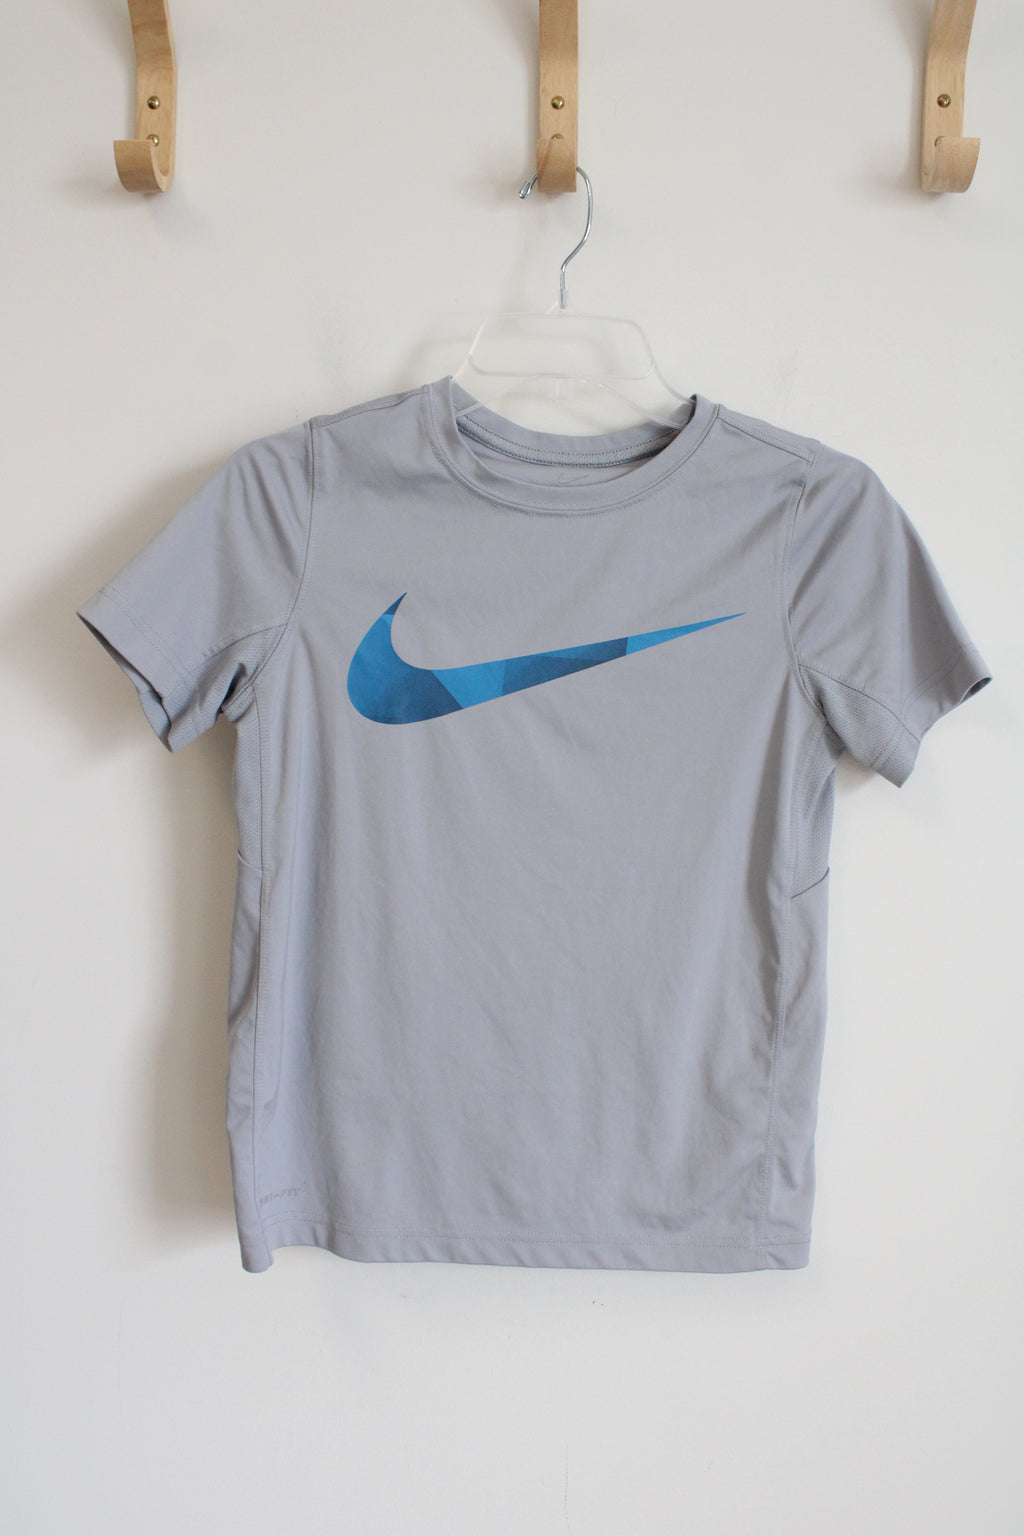 Nike Dri-Fit Gray Blue Logo Shirt | Youth M (10/12)